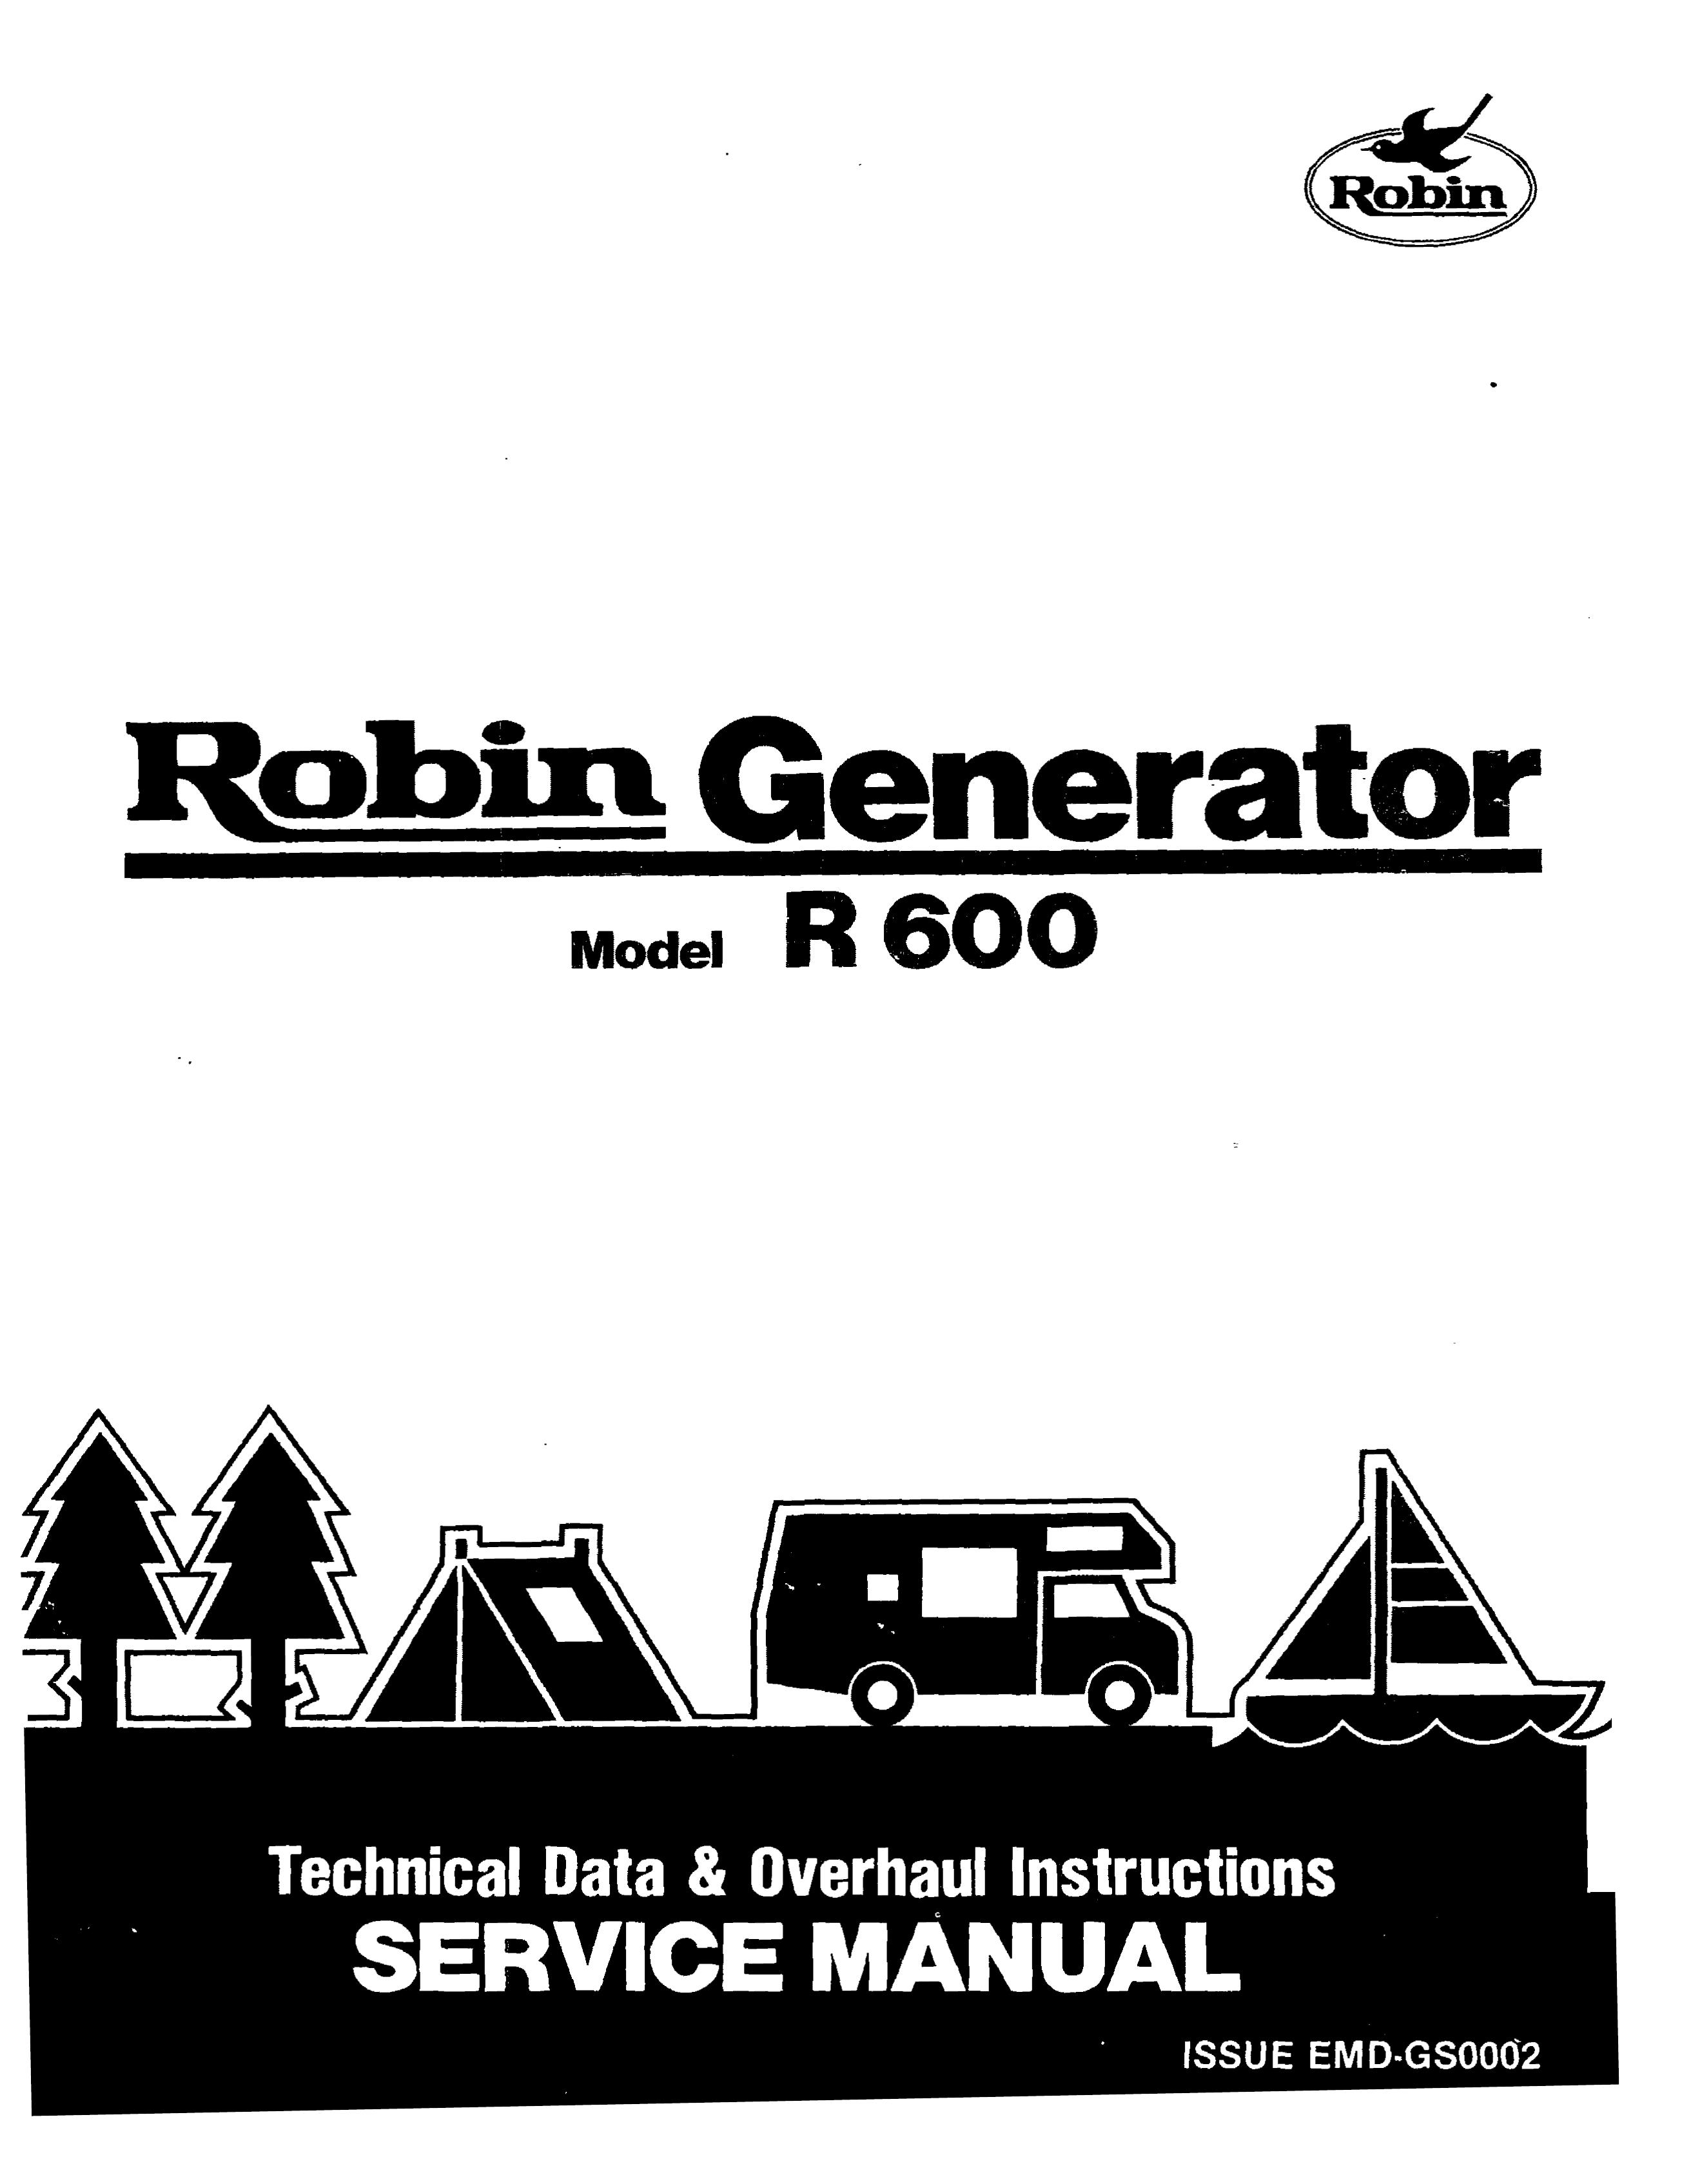 Subaru Robin Power Products R600 Portable Generator User Manual